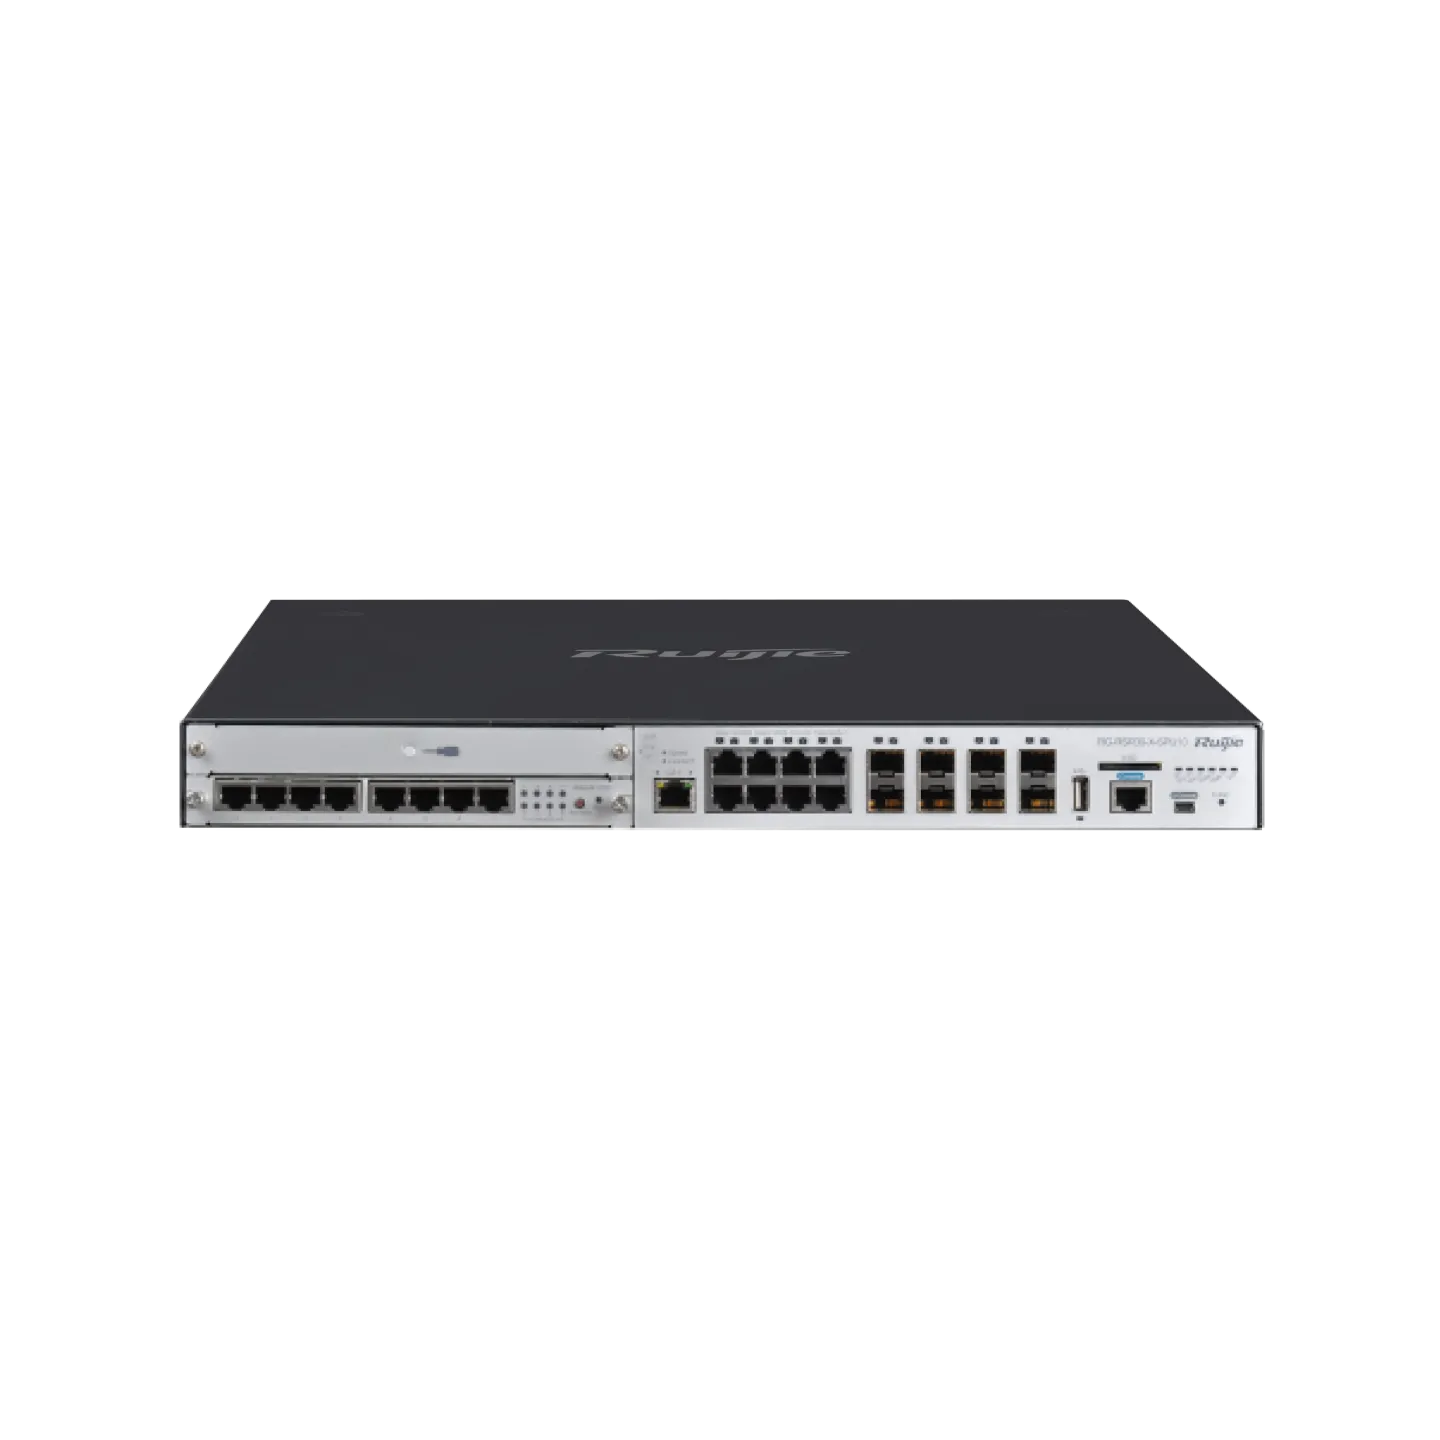 RG-RSR30-X-SPU10 V1.5 Multi-service box aggregation router, 9 Gigabit ports including 8 Combo ports, 4 service board slots